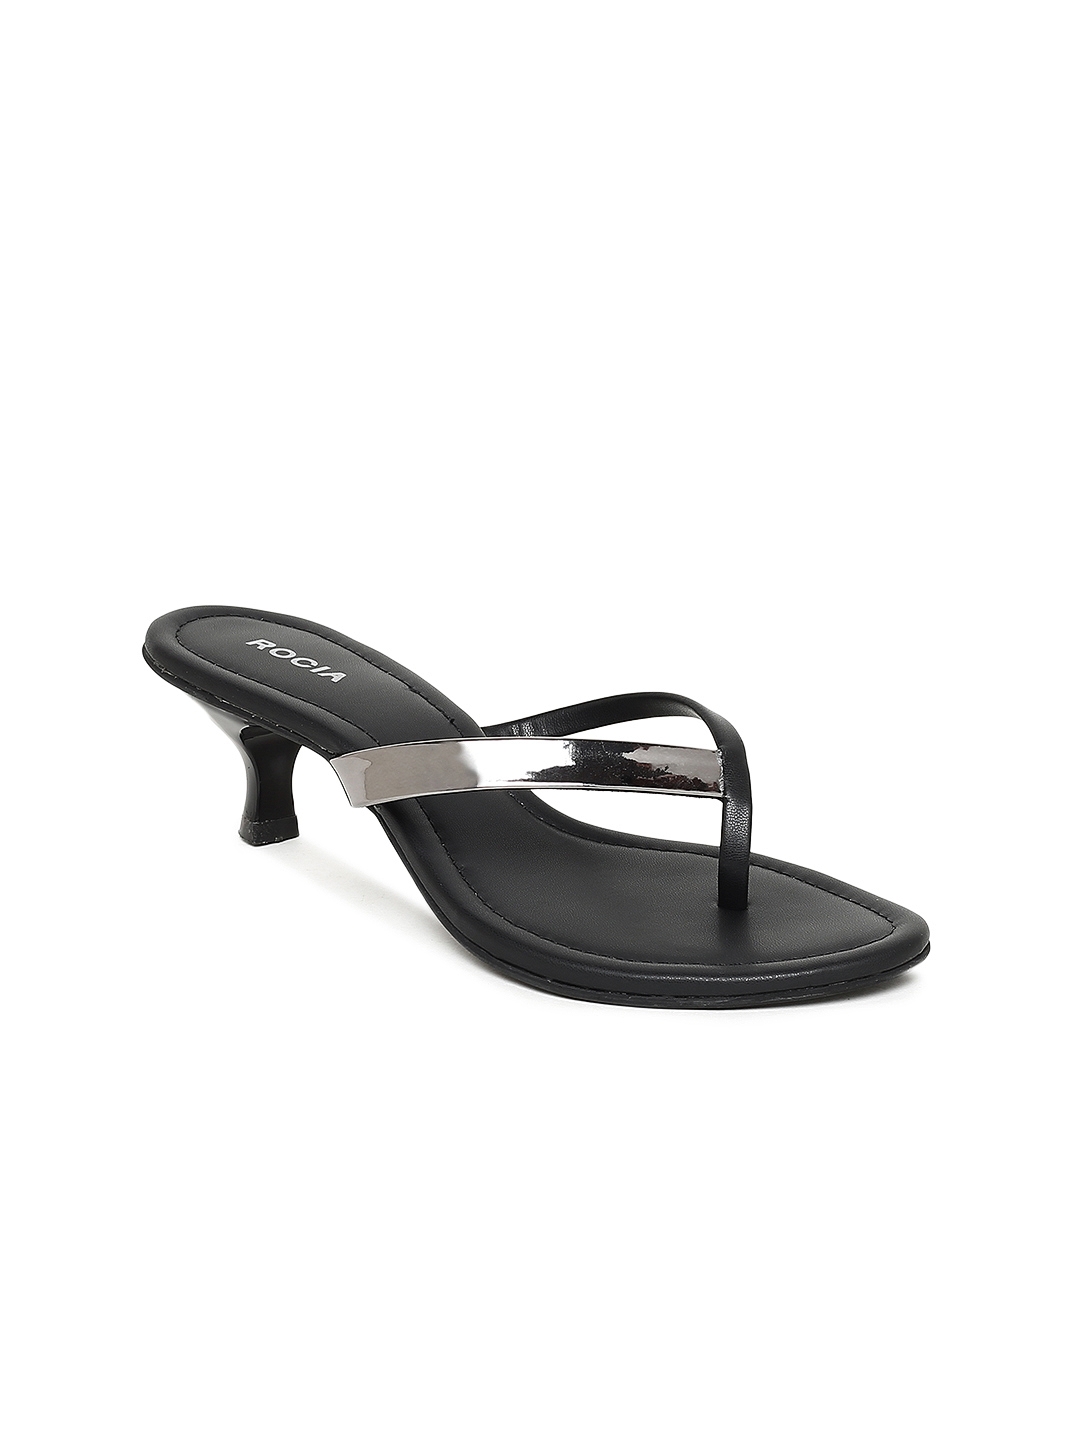 Buy Rocia Women Black Solid Sandals 